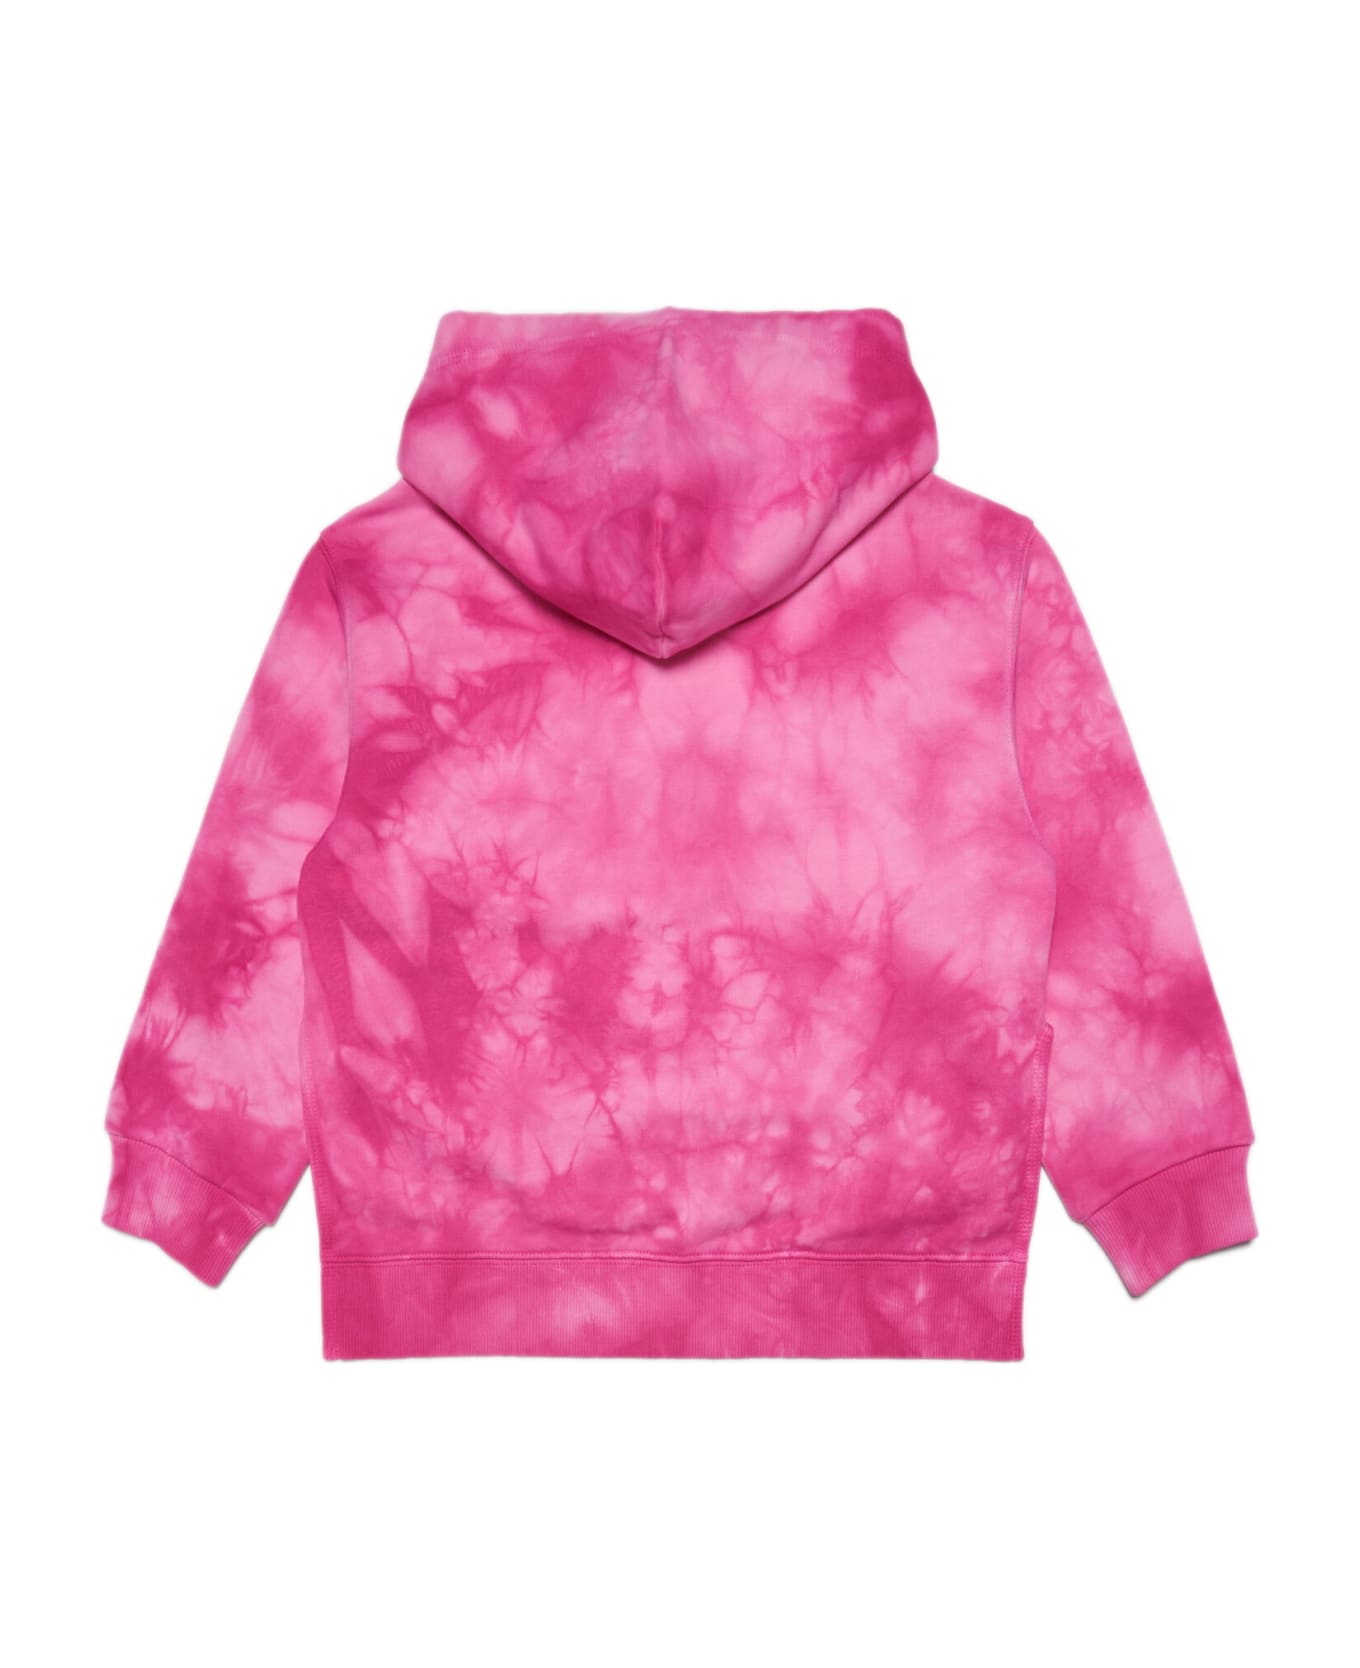 MM6 Maison Margiela Mm6s44u Sweat-shirt Maison Margiela Pink Tie-dye Effect Hooded Sweatshirt - Super pink